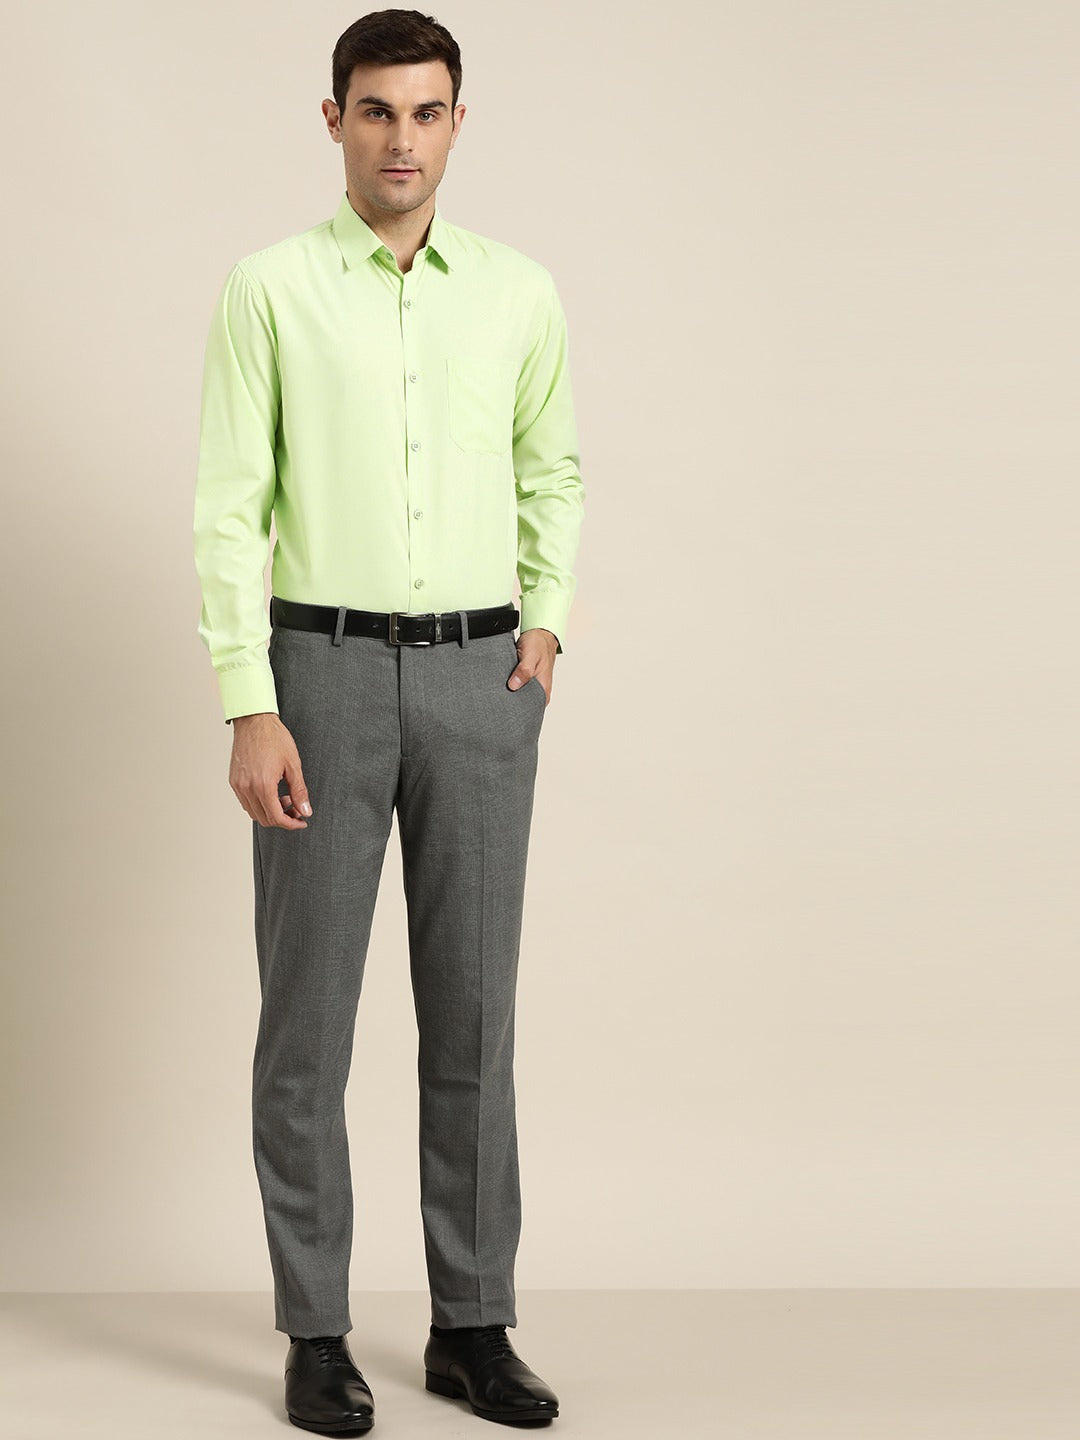 Men's Cotton Lime Green Casual Shirt